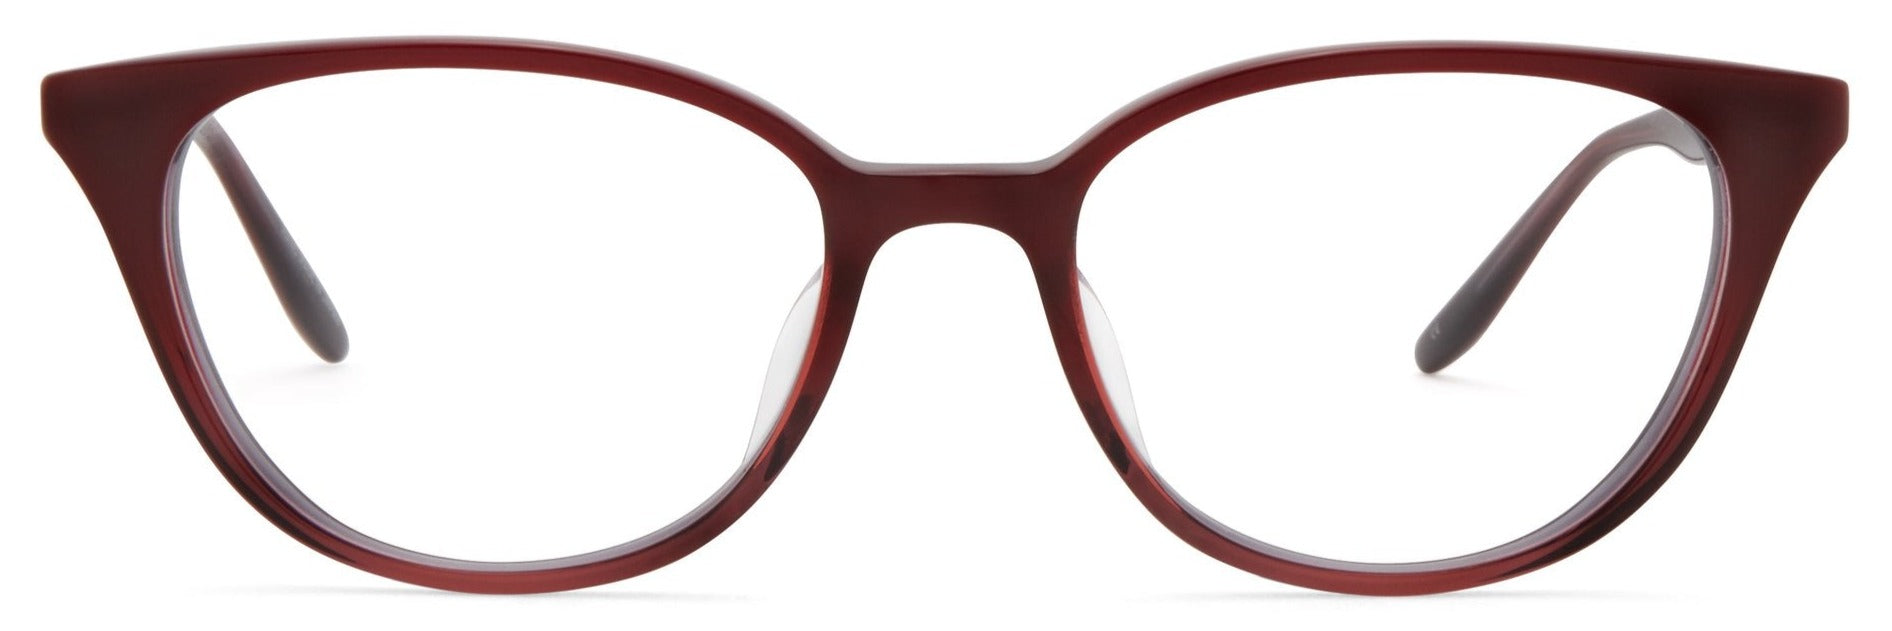 Alexander Daas - Barton Perreira Elise Eyeglasses - Oxblood - Front View